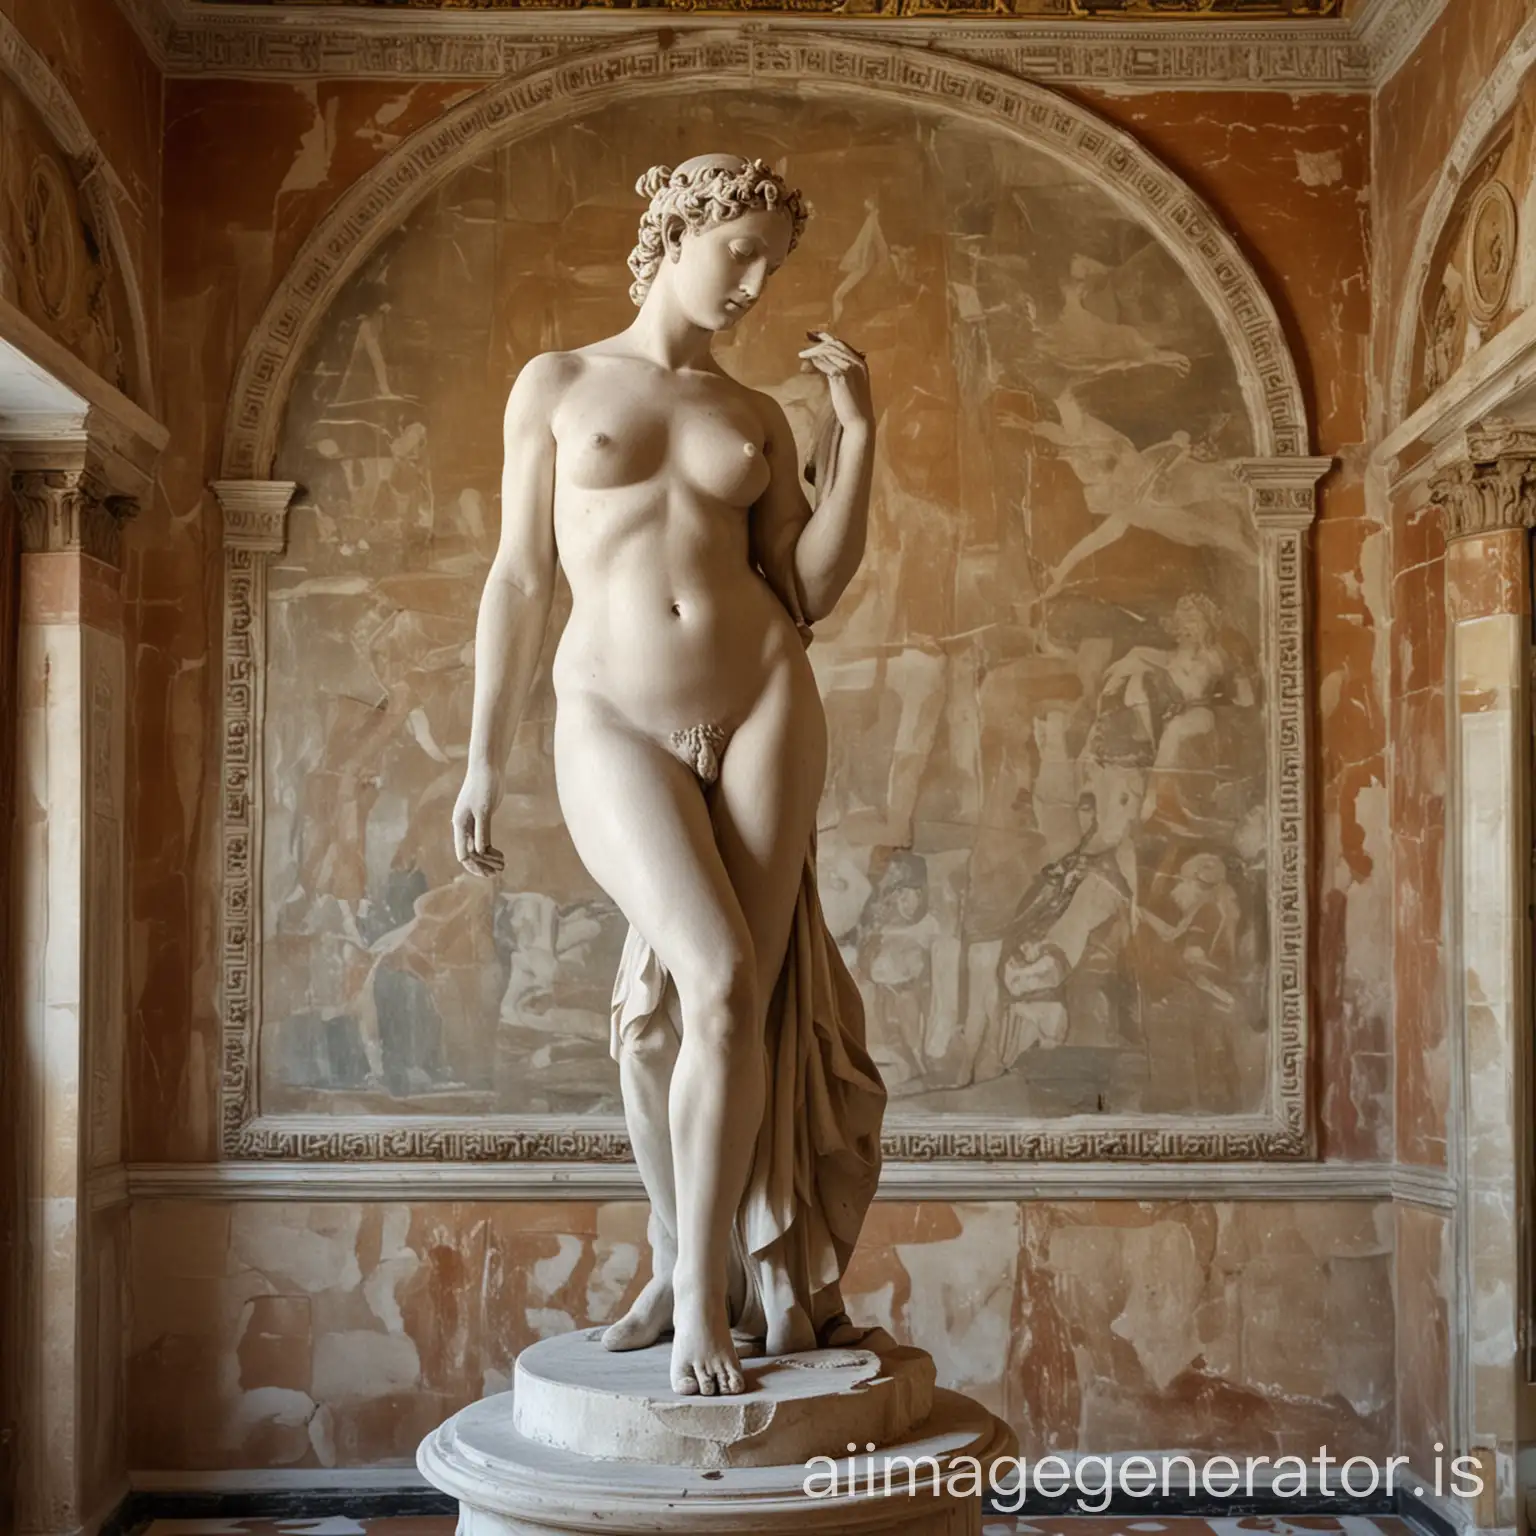 Renaissance-Art-Room-Greek-Statue-of-Nude-Woman-in-Stone